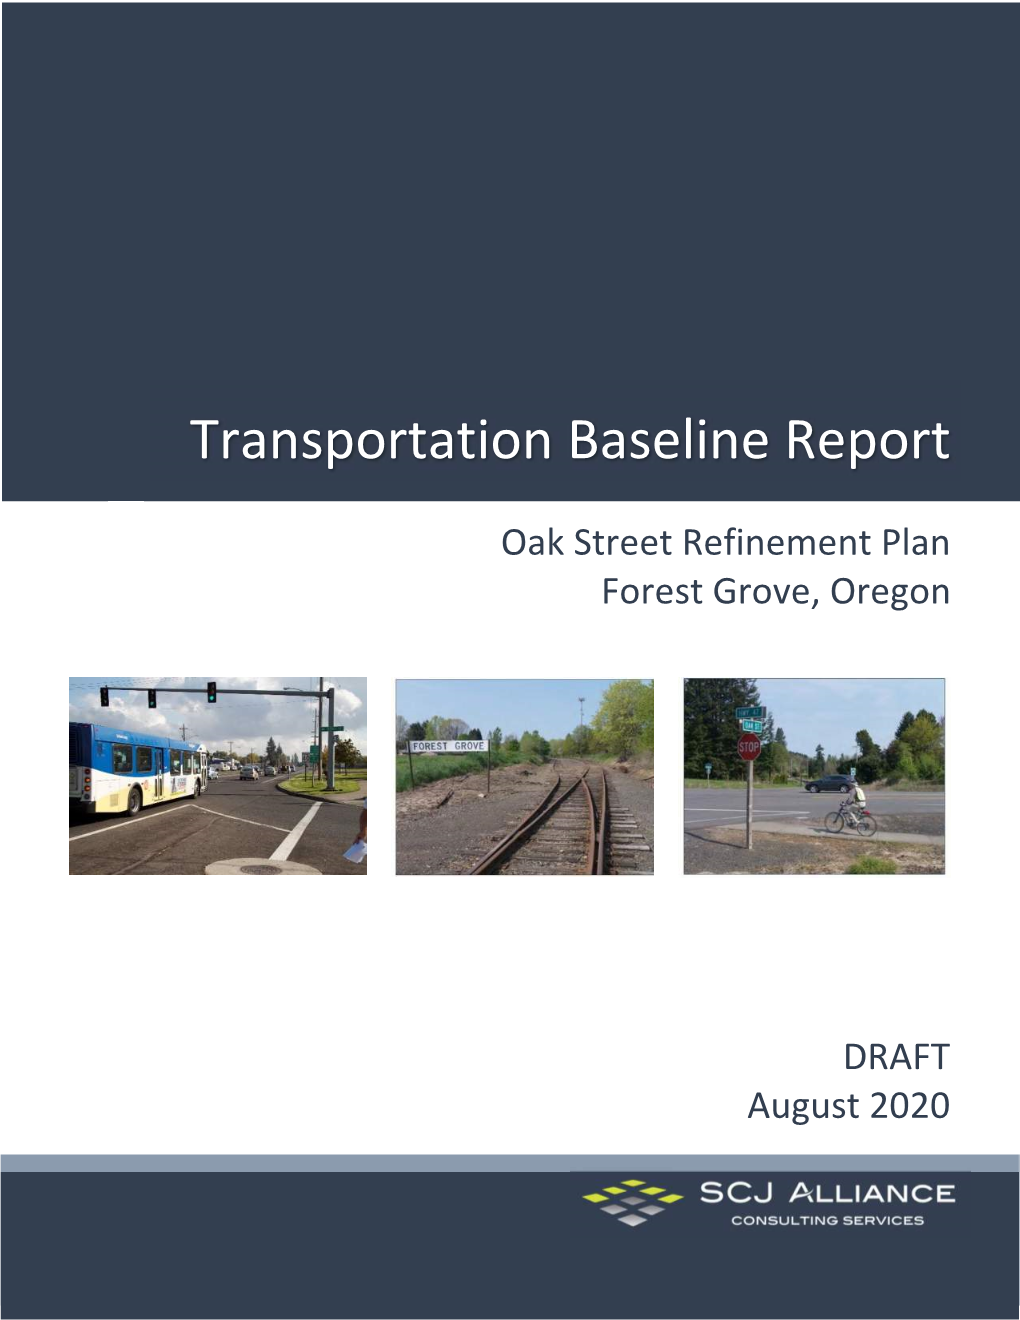 Draft Transportation Baseline Report